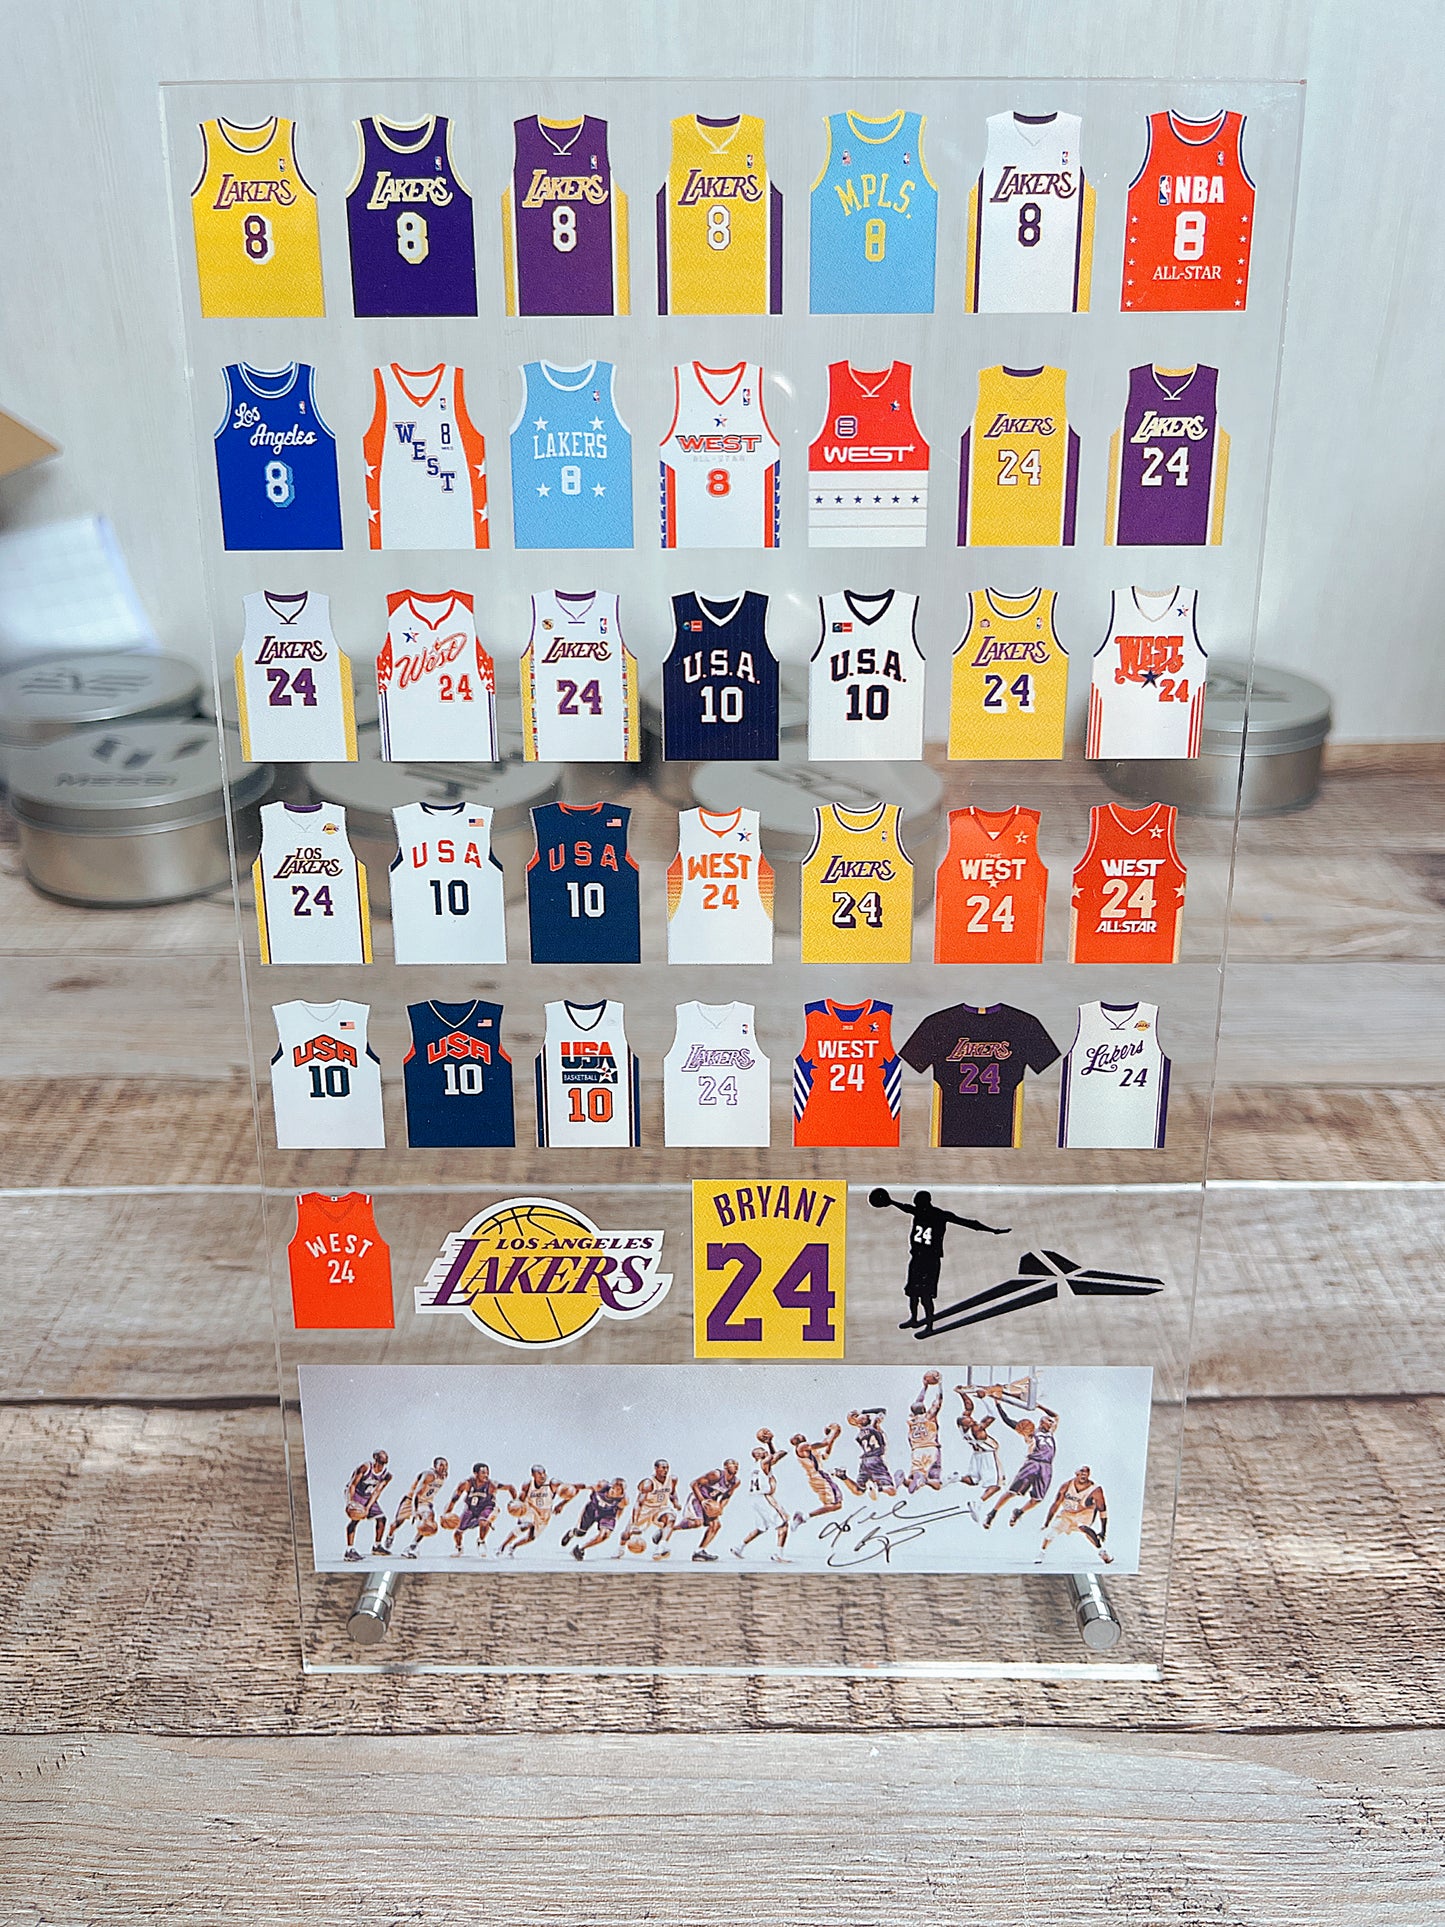 Kobe Bundles|Jersey Collection Picture+Champion Ring+Player Keychain+Jerseykeychain+Basketball keychain+Shoekeychain+Four Bracelets+PhoneCase